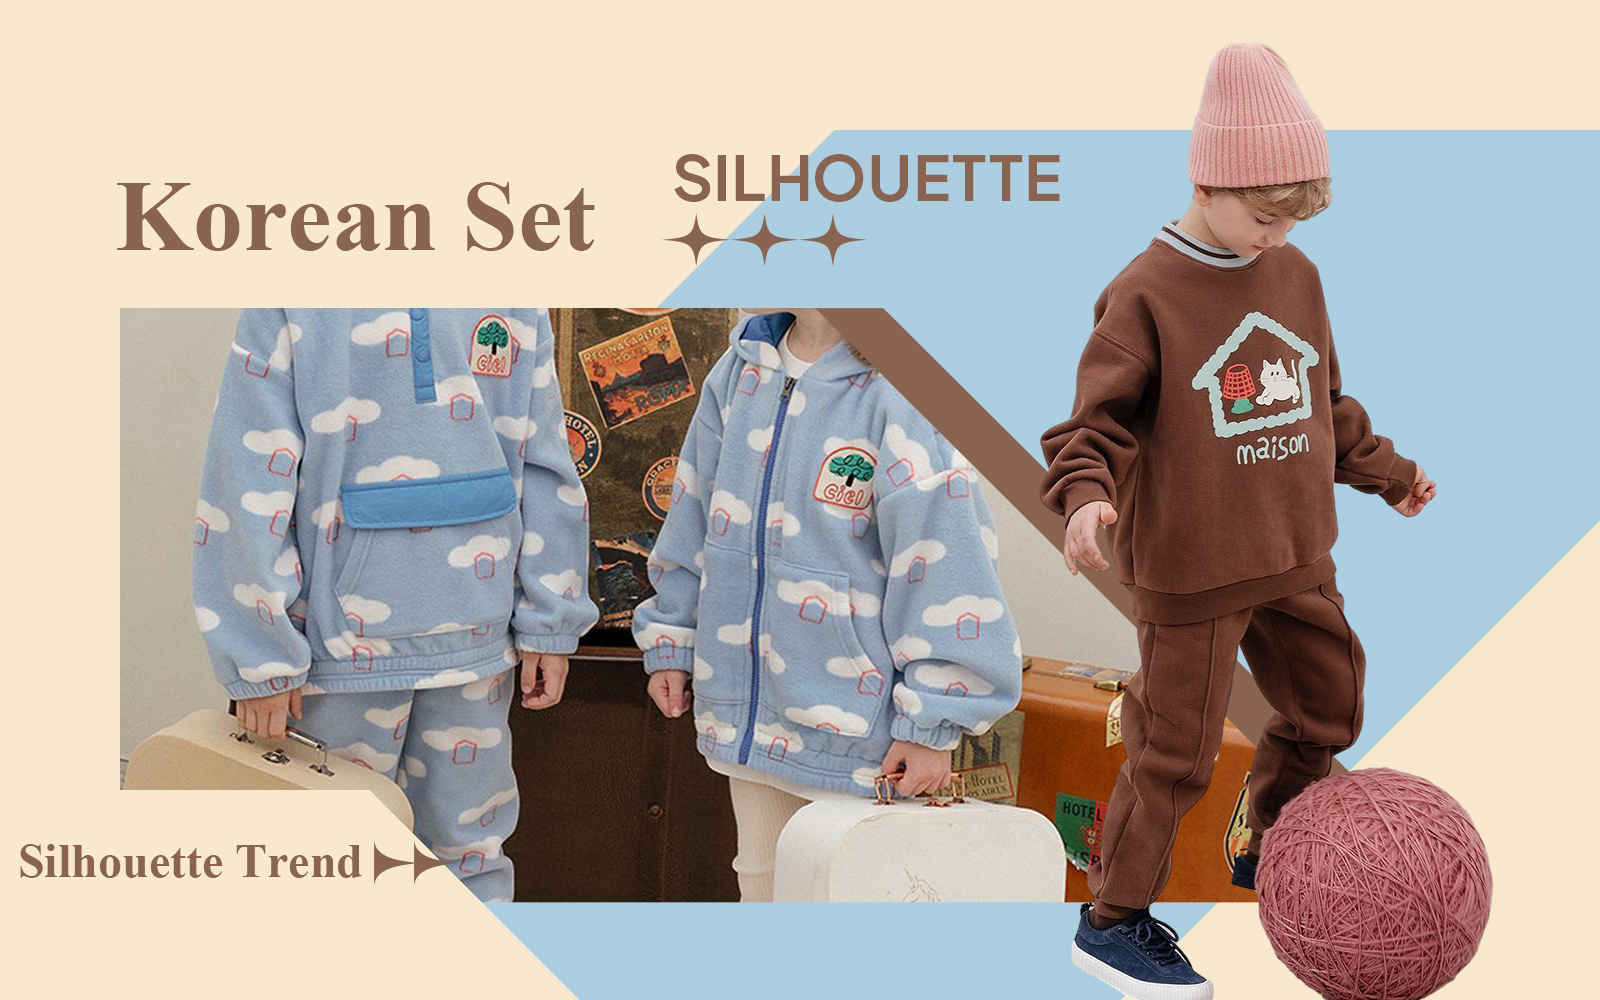 Korean Set -- The Silhouette Trend for Kidswear